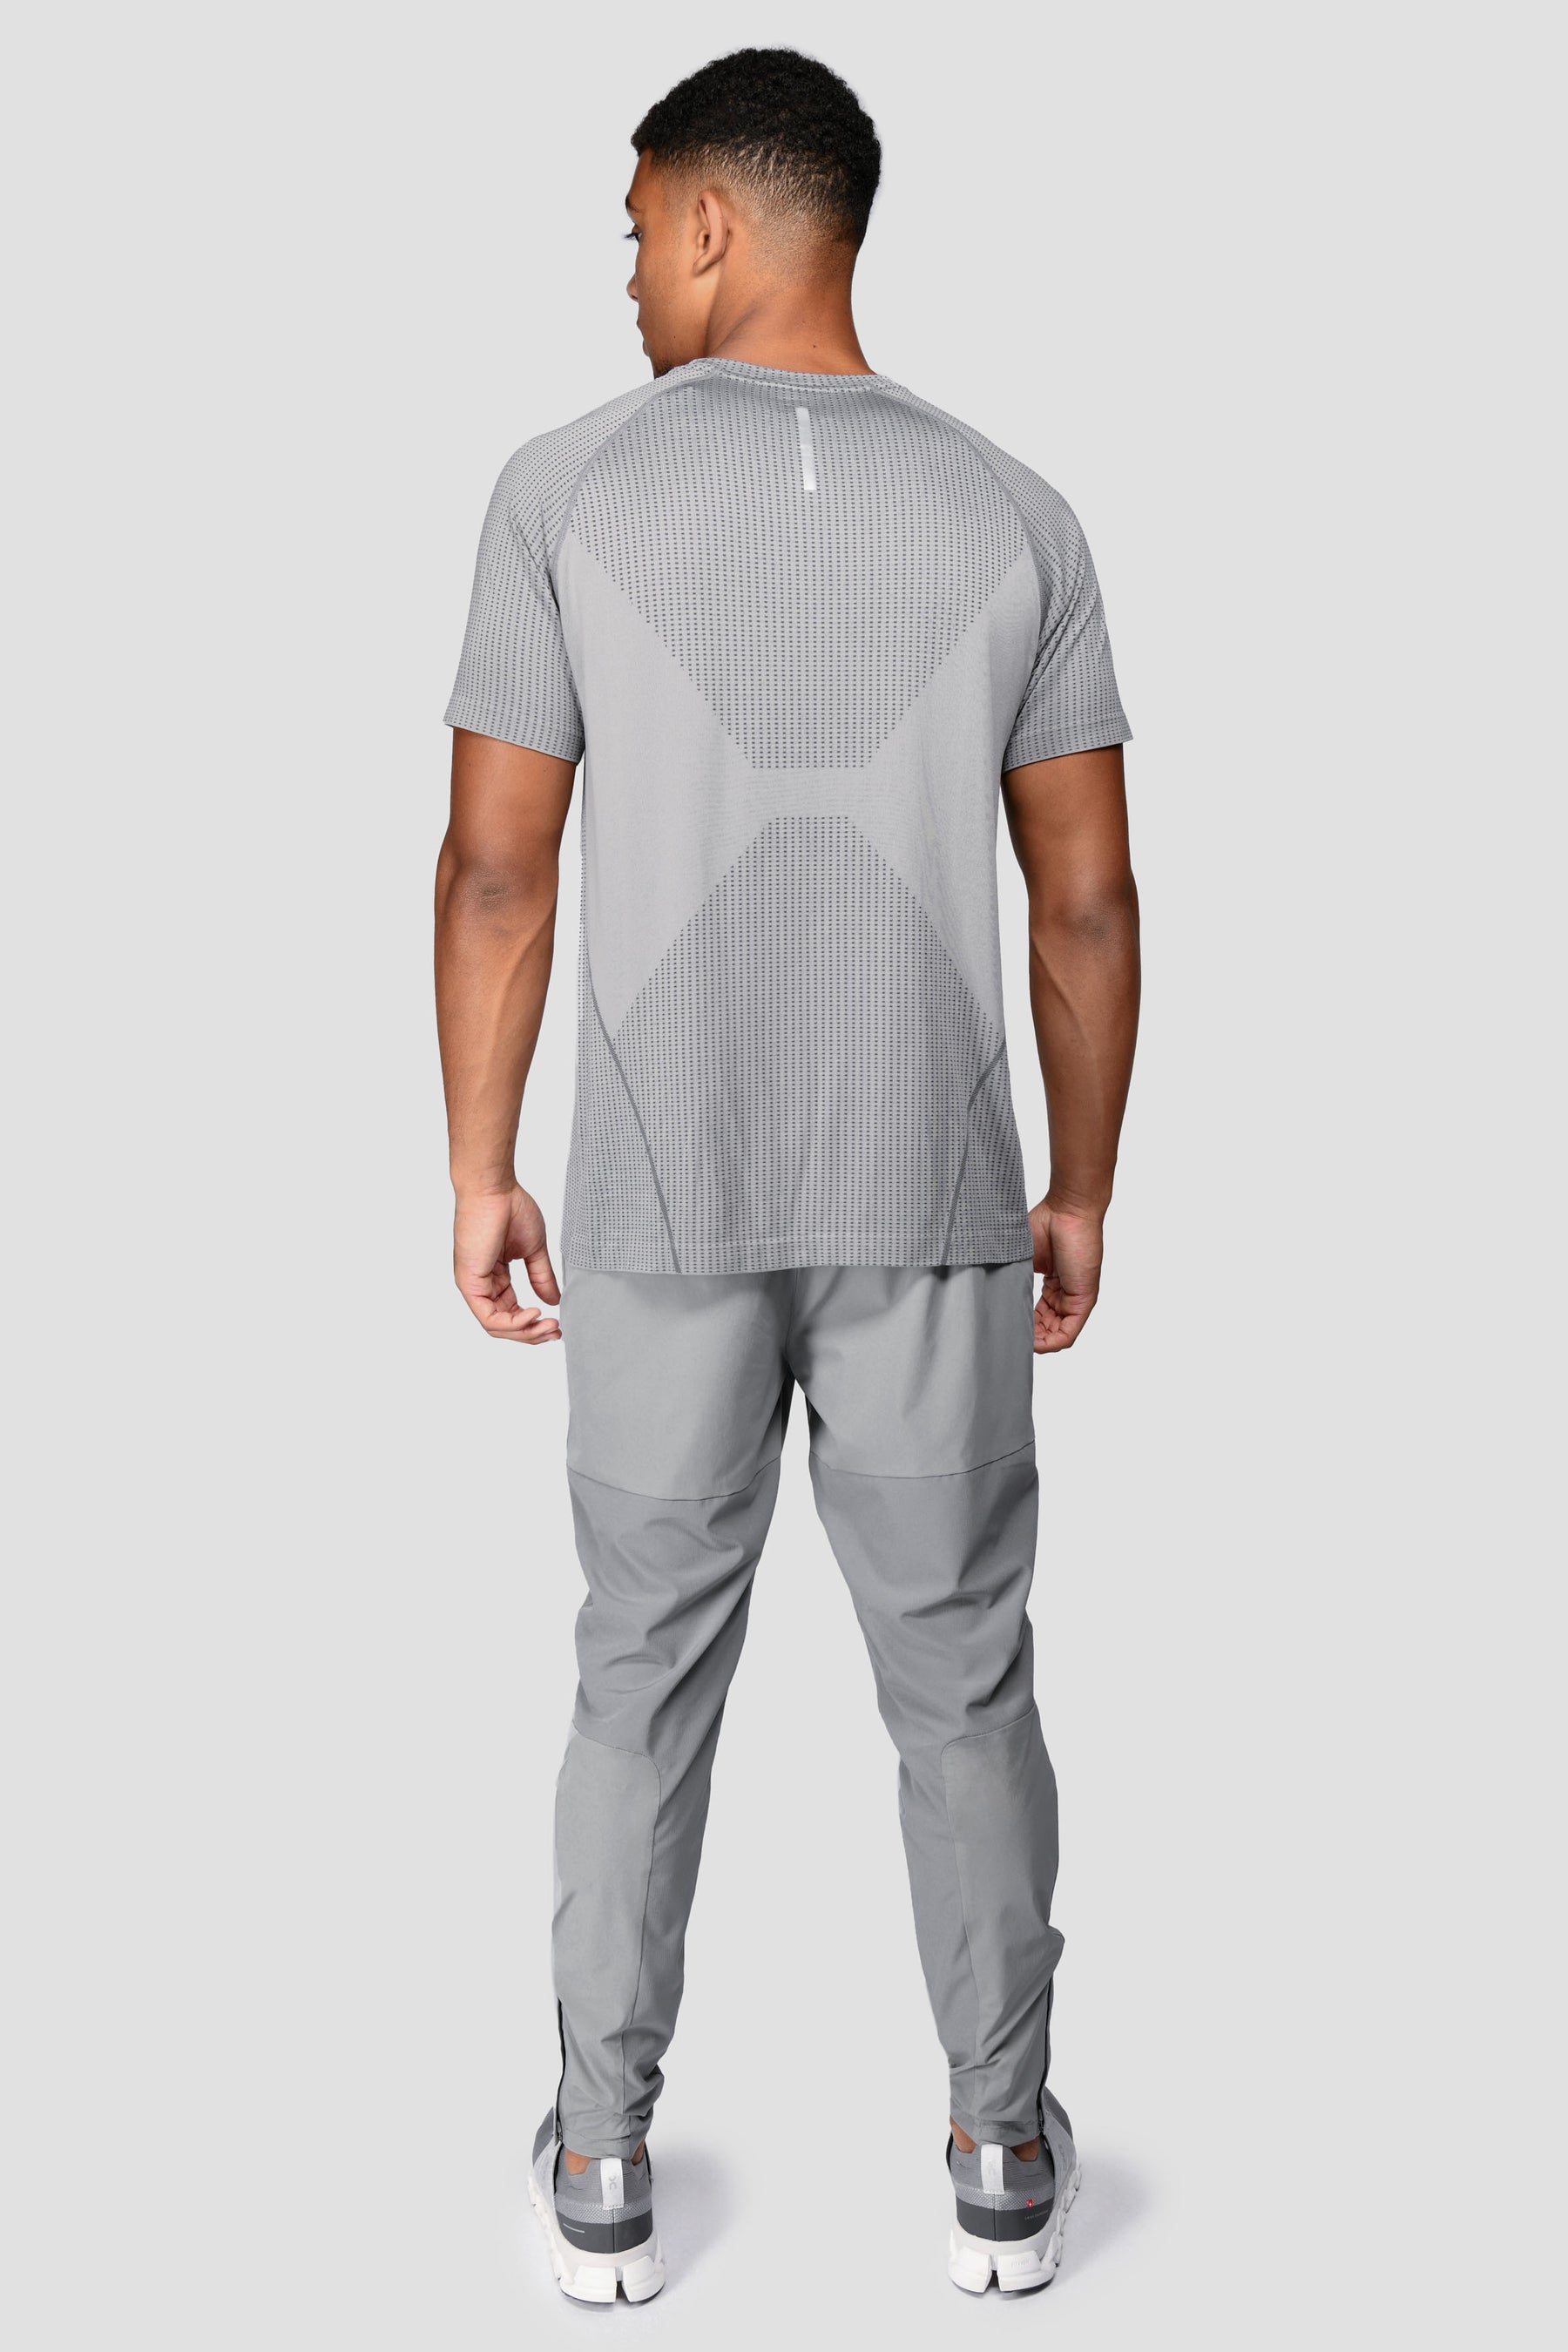 Endurance Seamless T-Shirt - Platinum Grey/Jet Grey